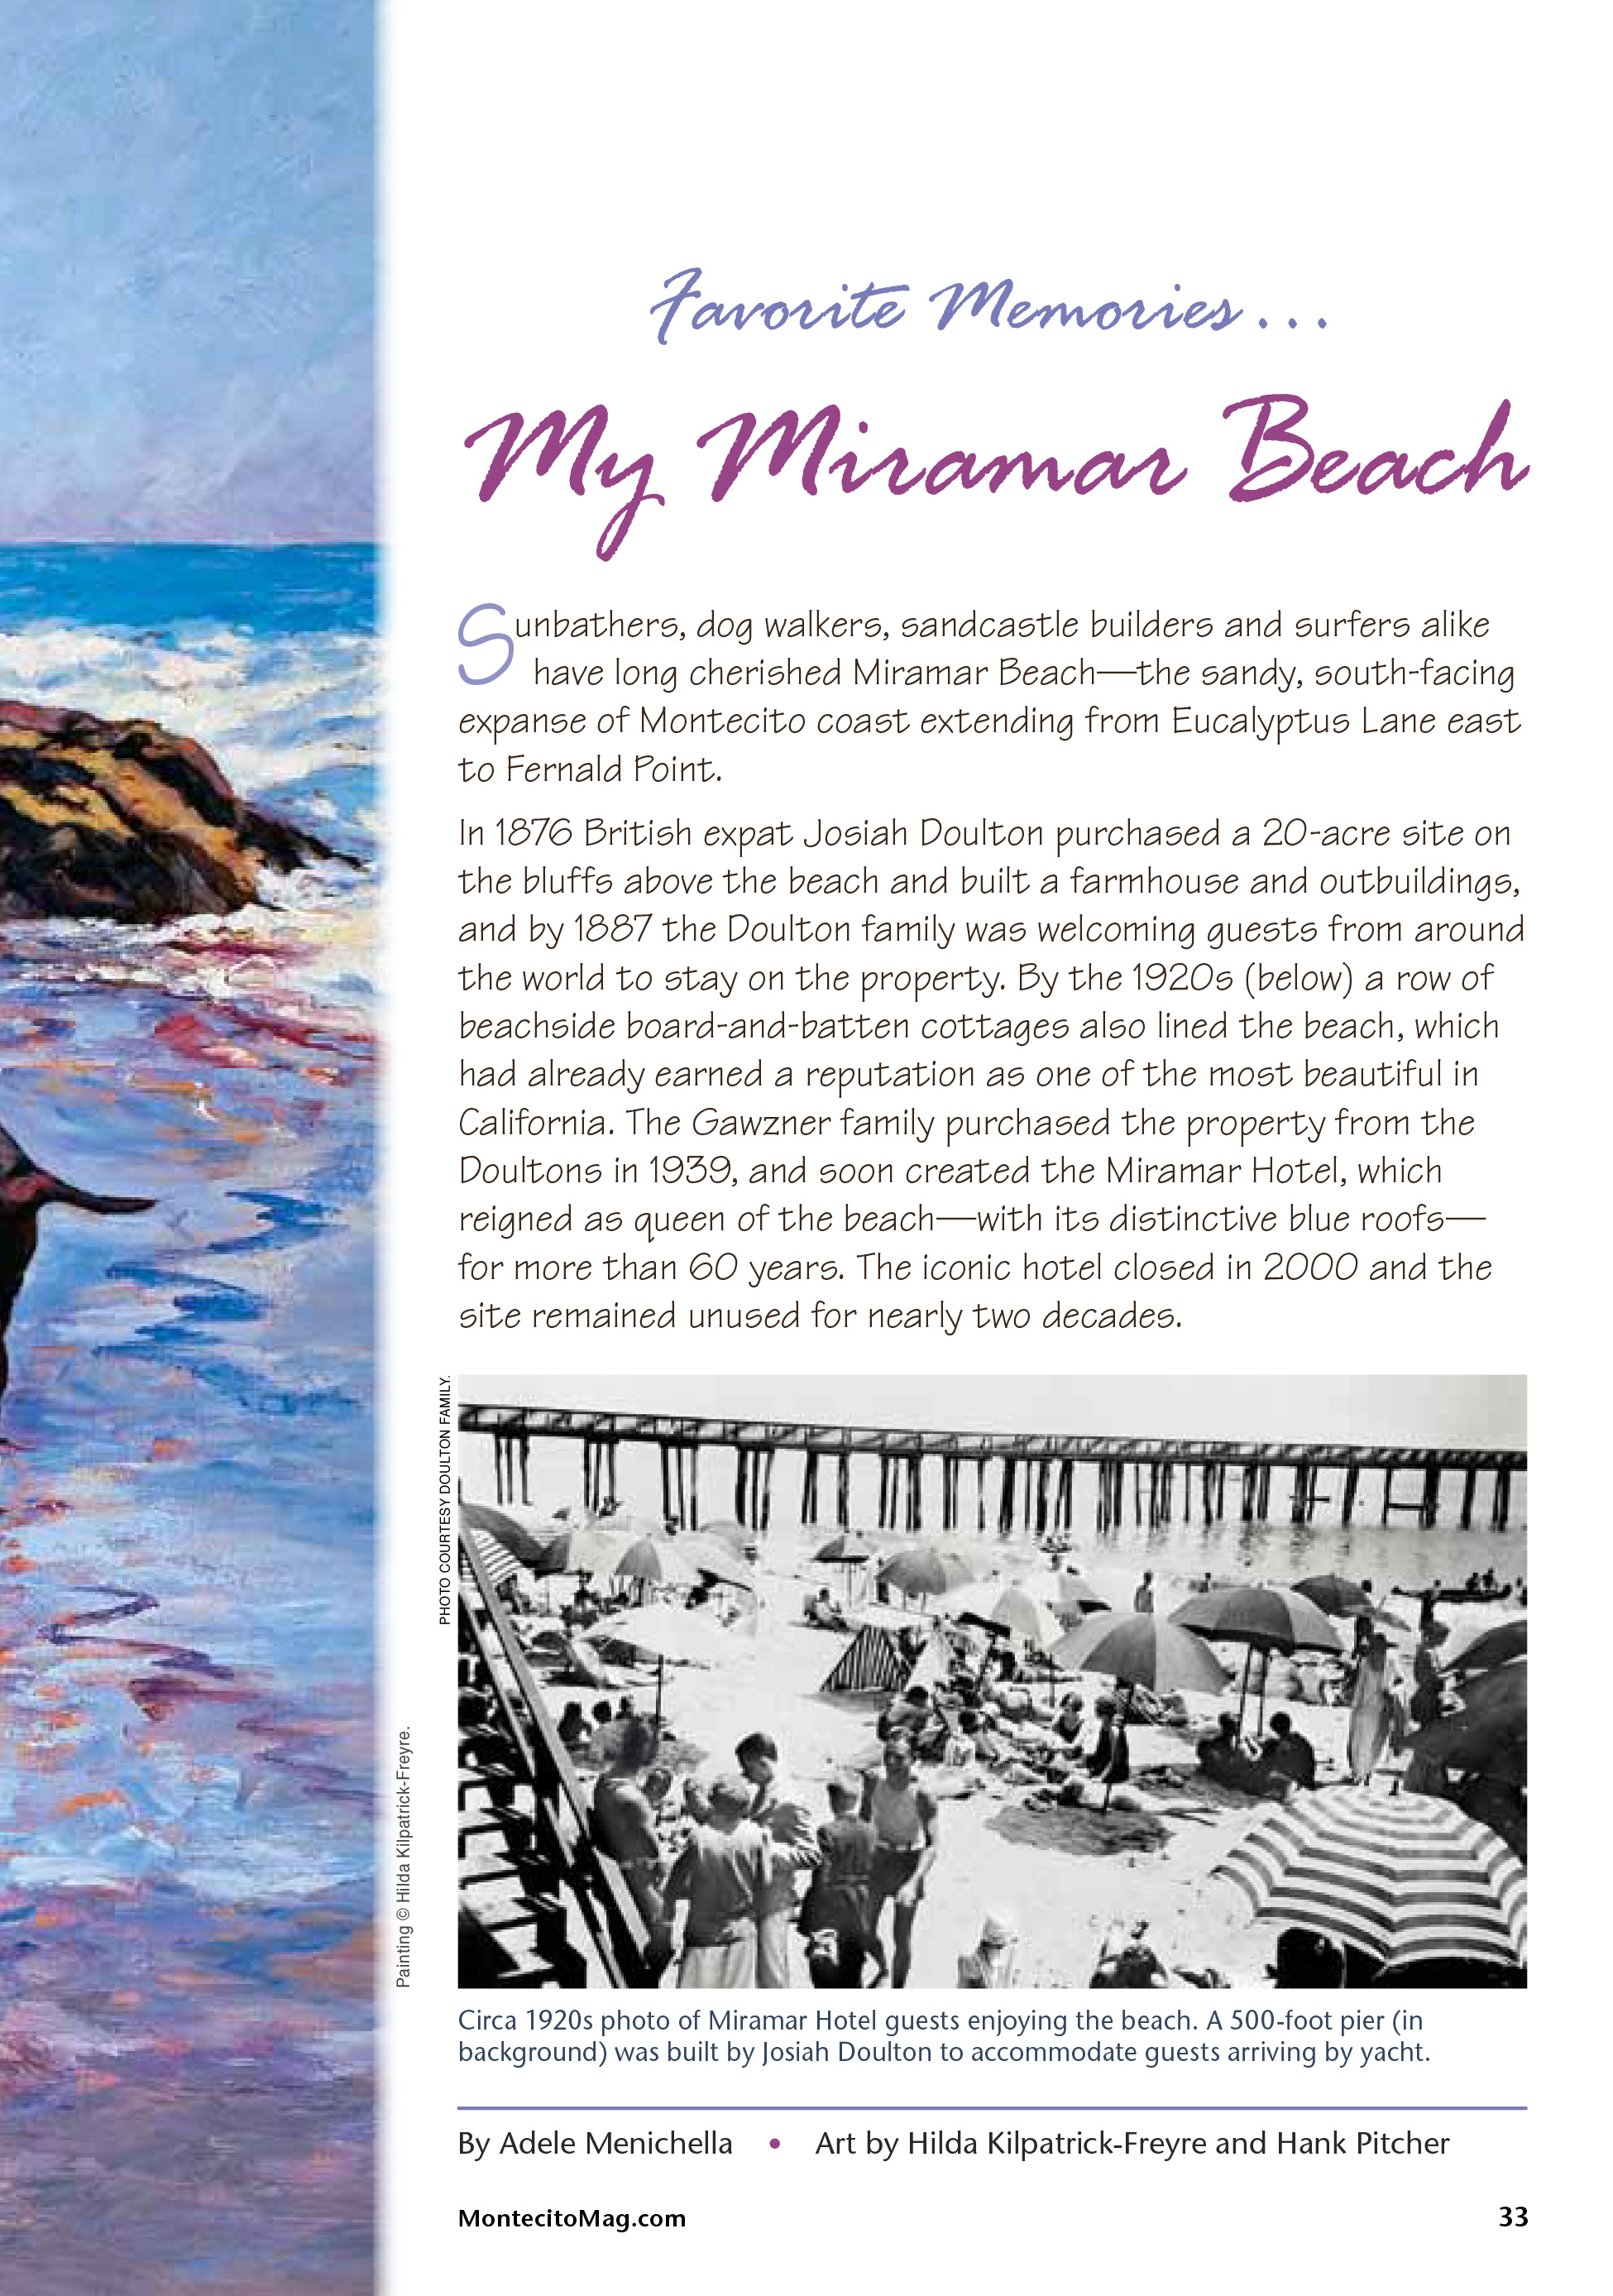 MM--iramar-Beach-Memories-2.jpg